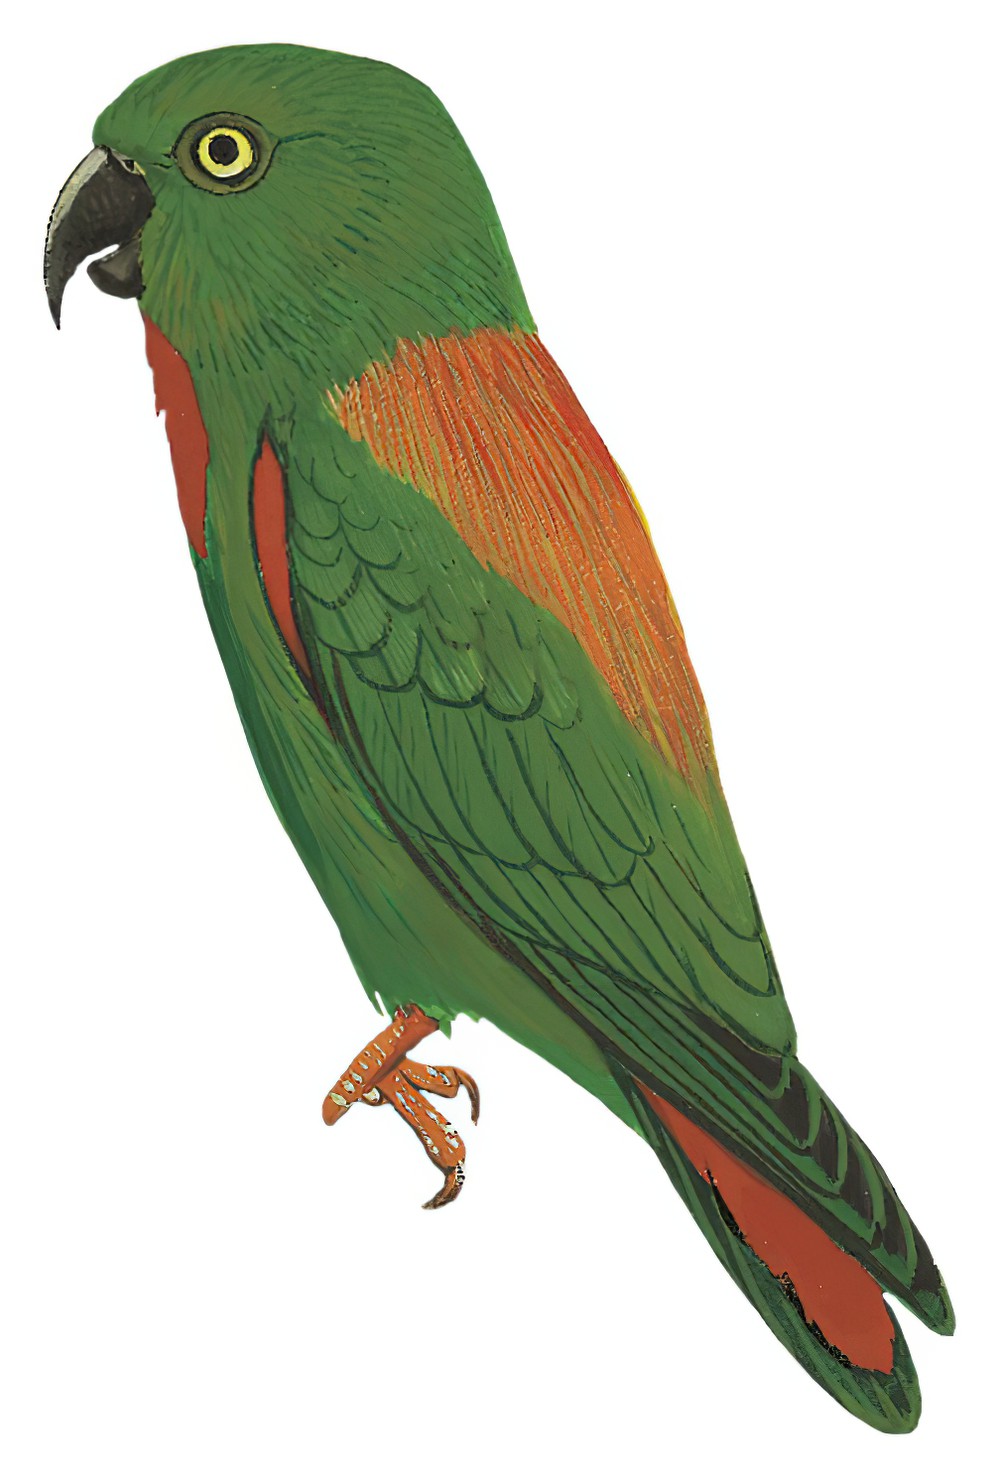 Sula Hanging-Parrot / Loriculus sclateri